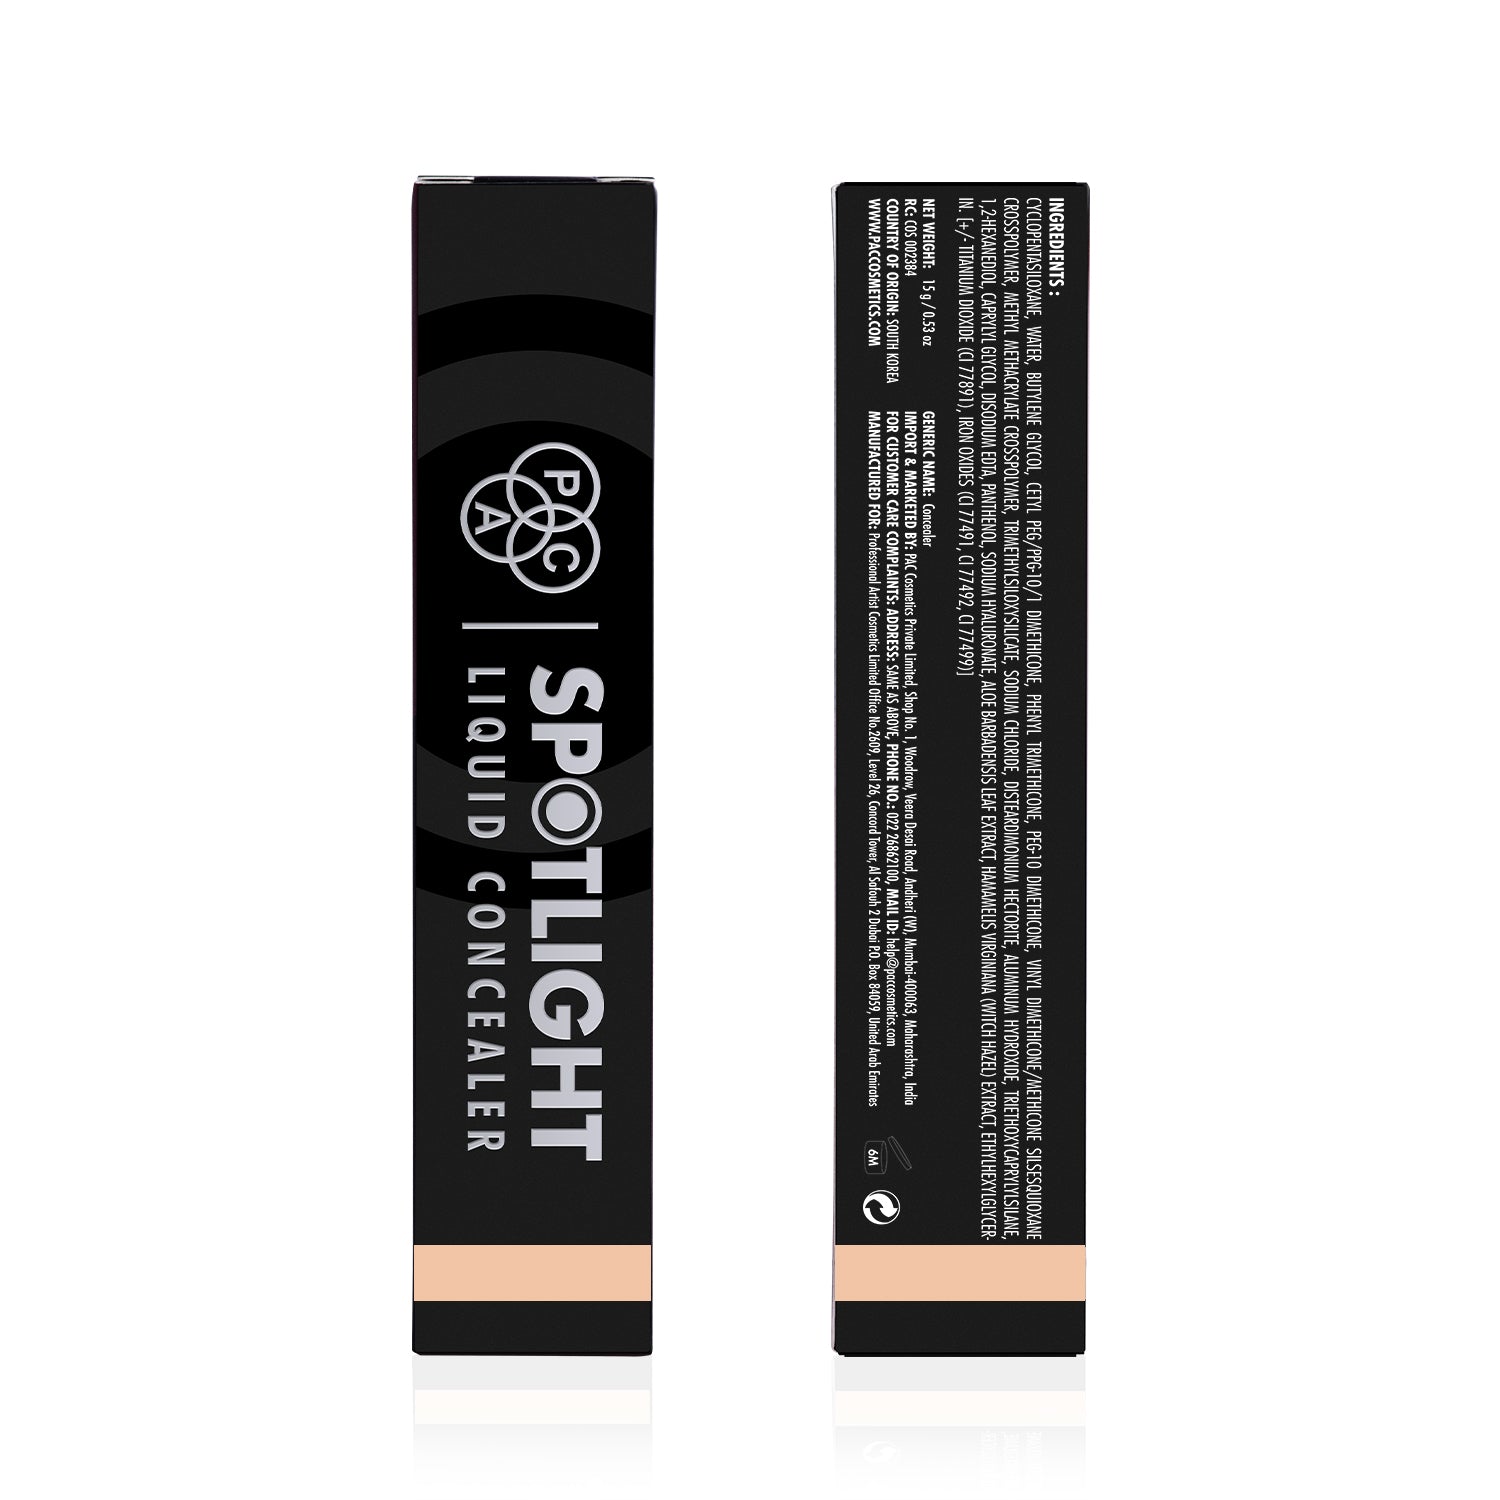 PAC Cosmetics Spotlight Liquid Concealer (15 gm) #Color_1.5 (Spiced Buttermilk)